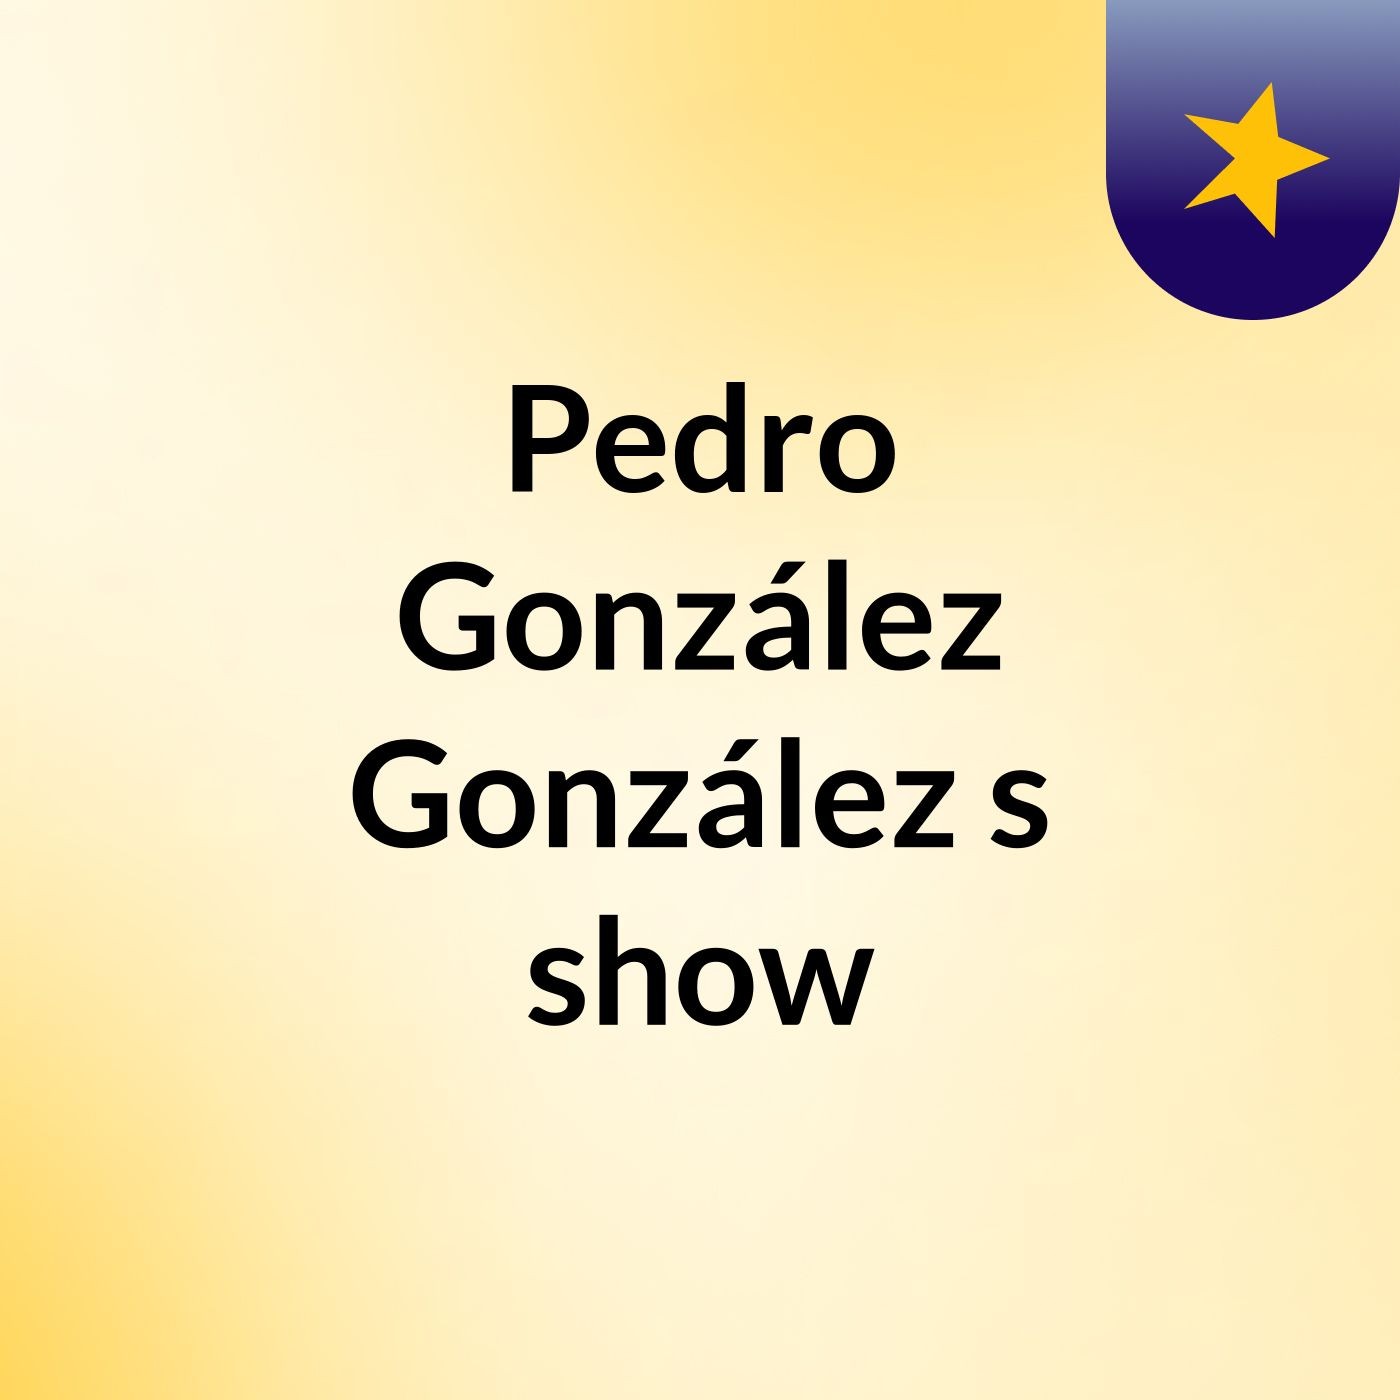 Pedro González González's show